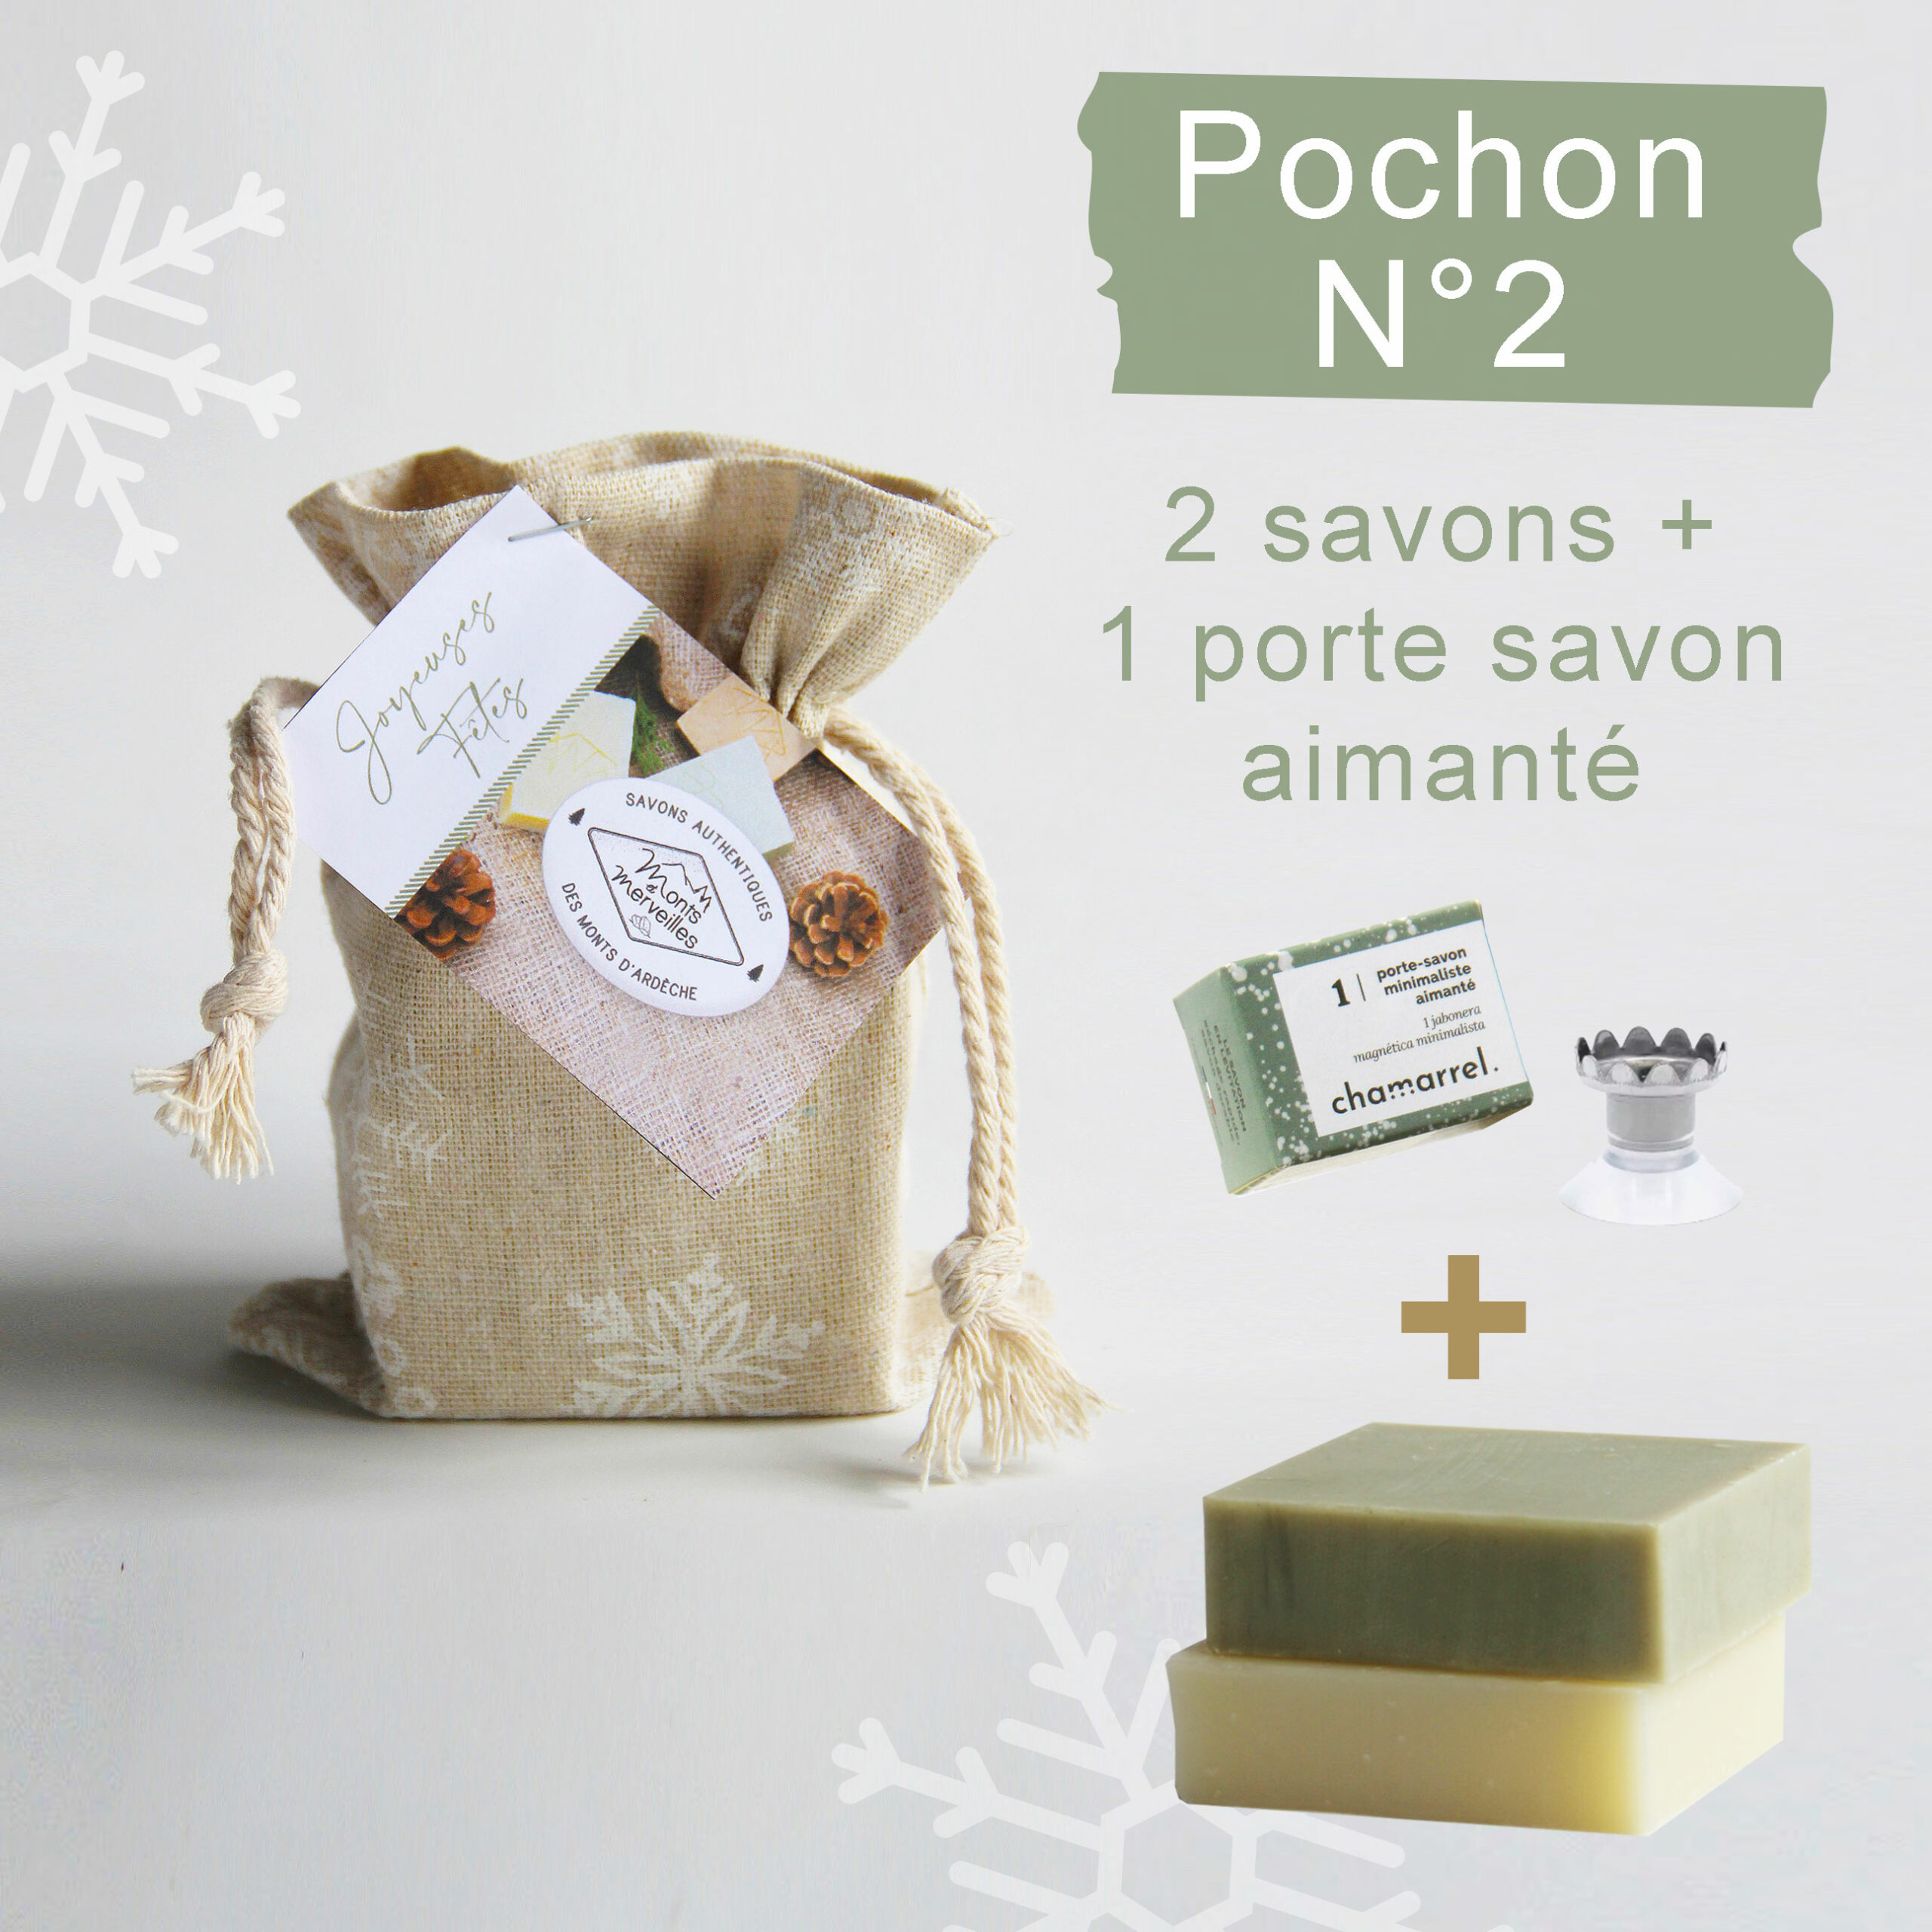 Pochon N2-savon chamarrel-cadeau noël Ardèche